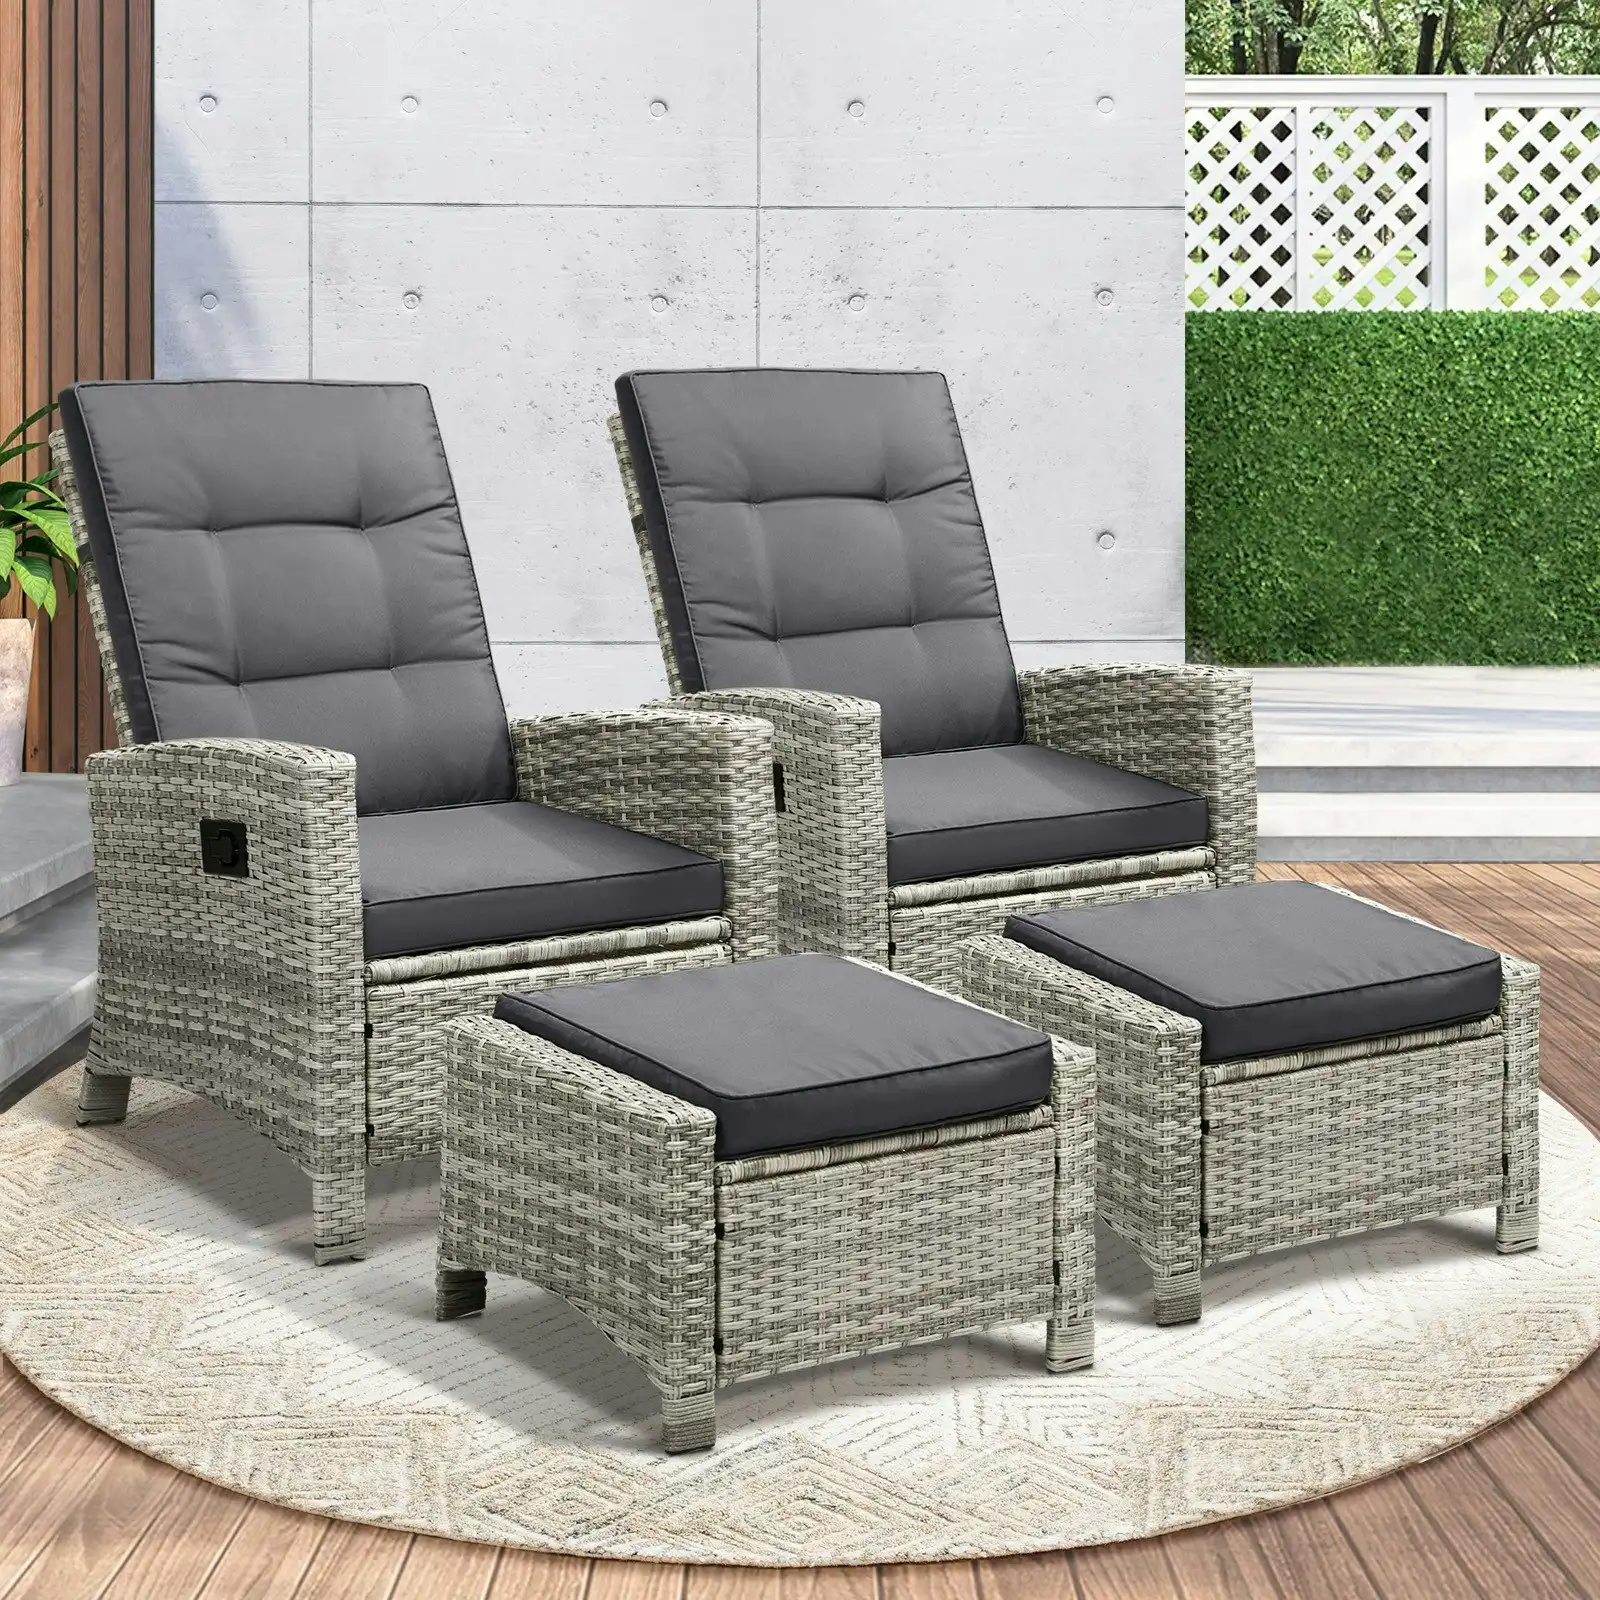 Livsip Recliner Chairs Outdoor Sun Lounger Setting Wicker Sofa Patio Furniture